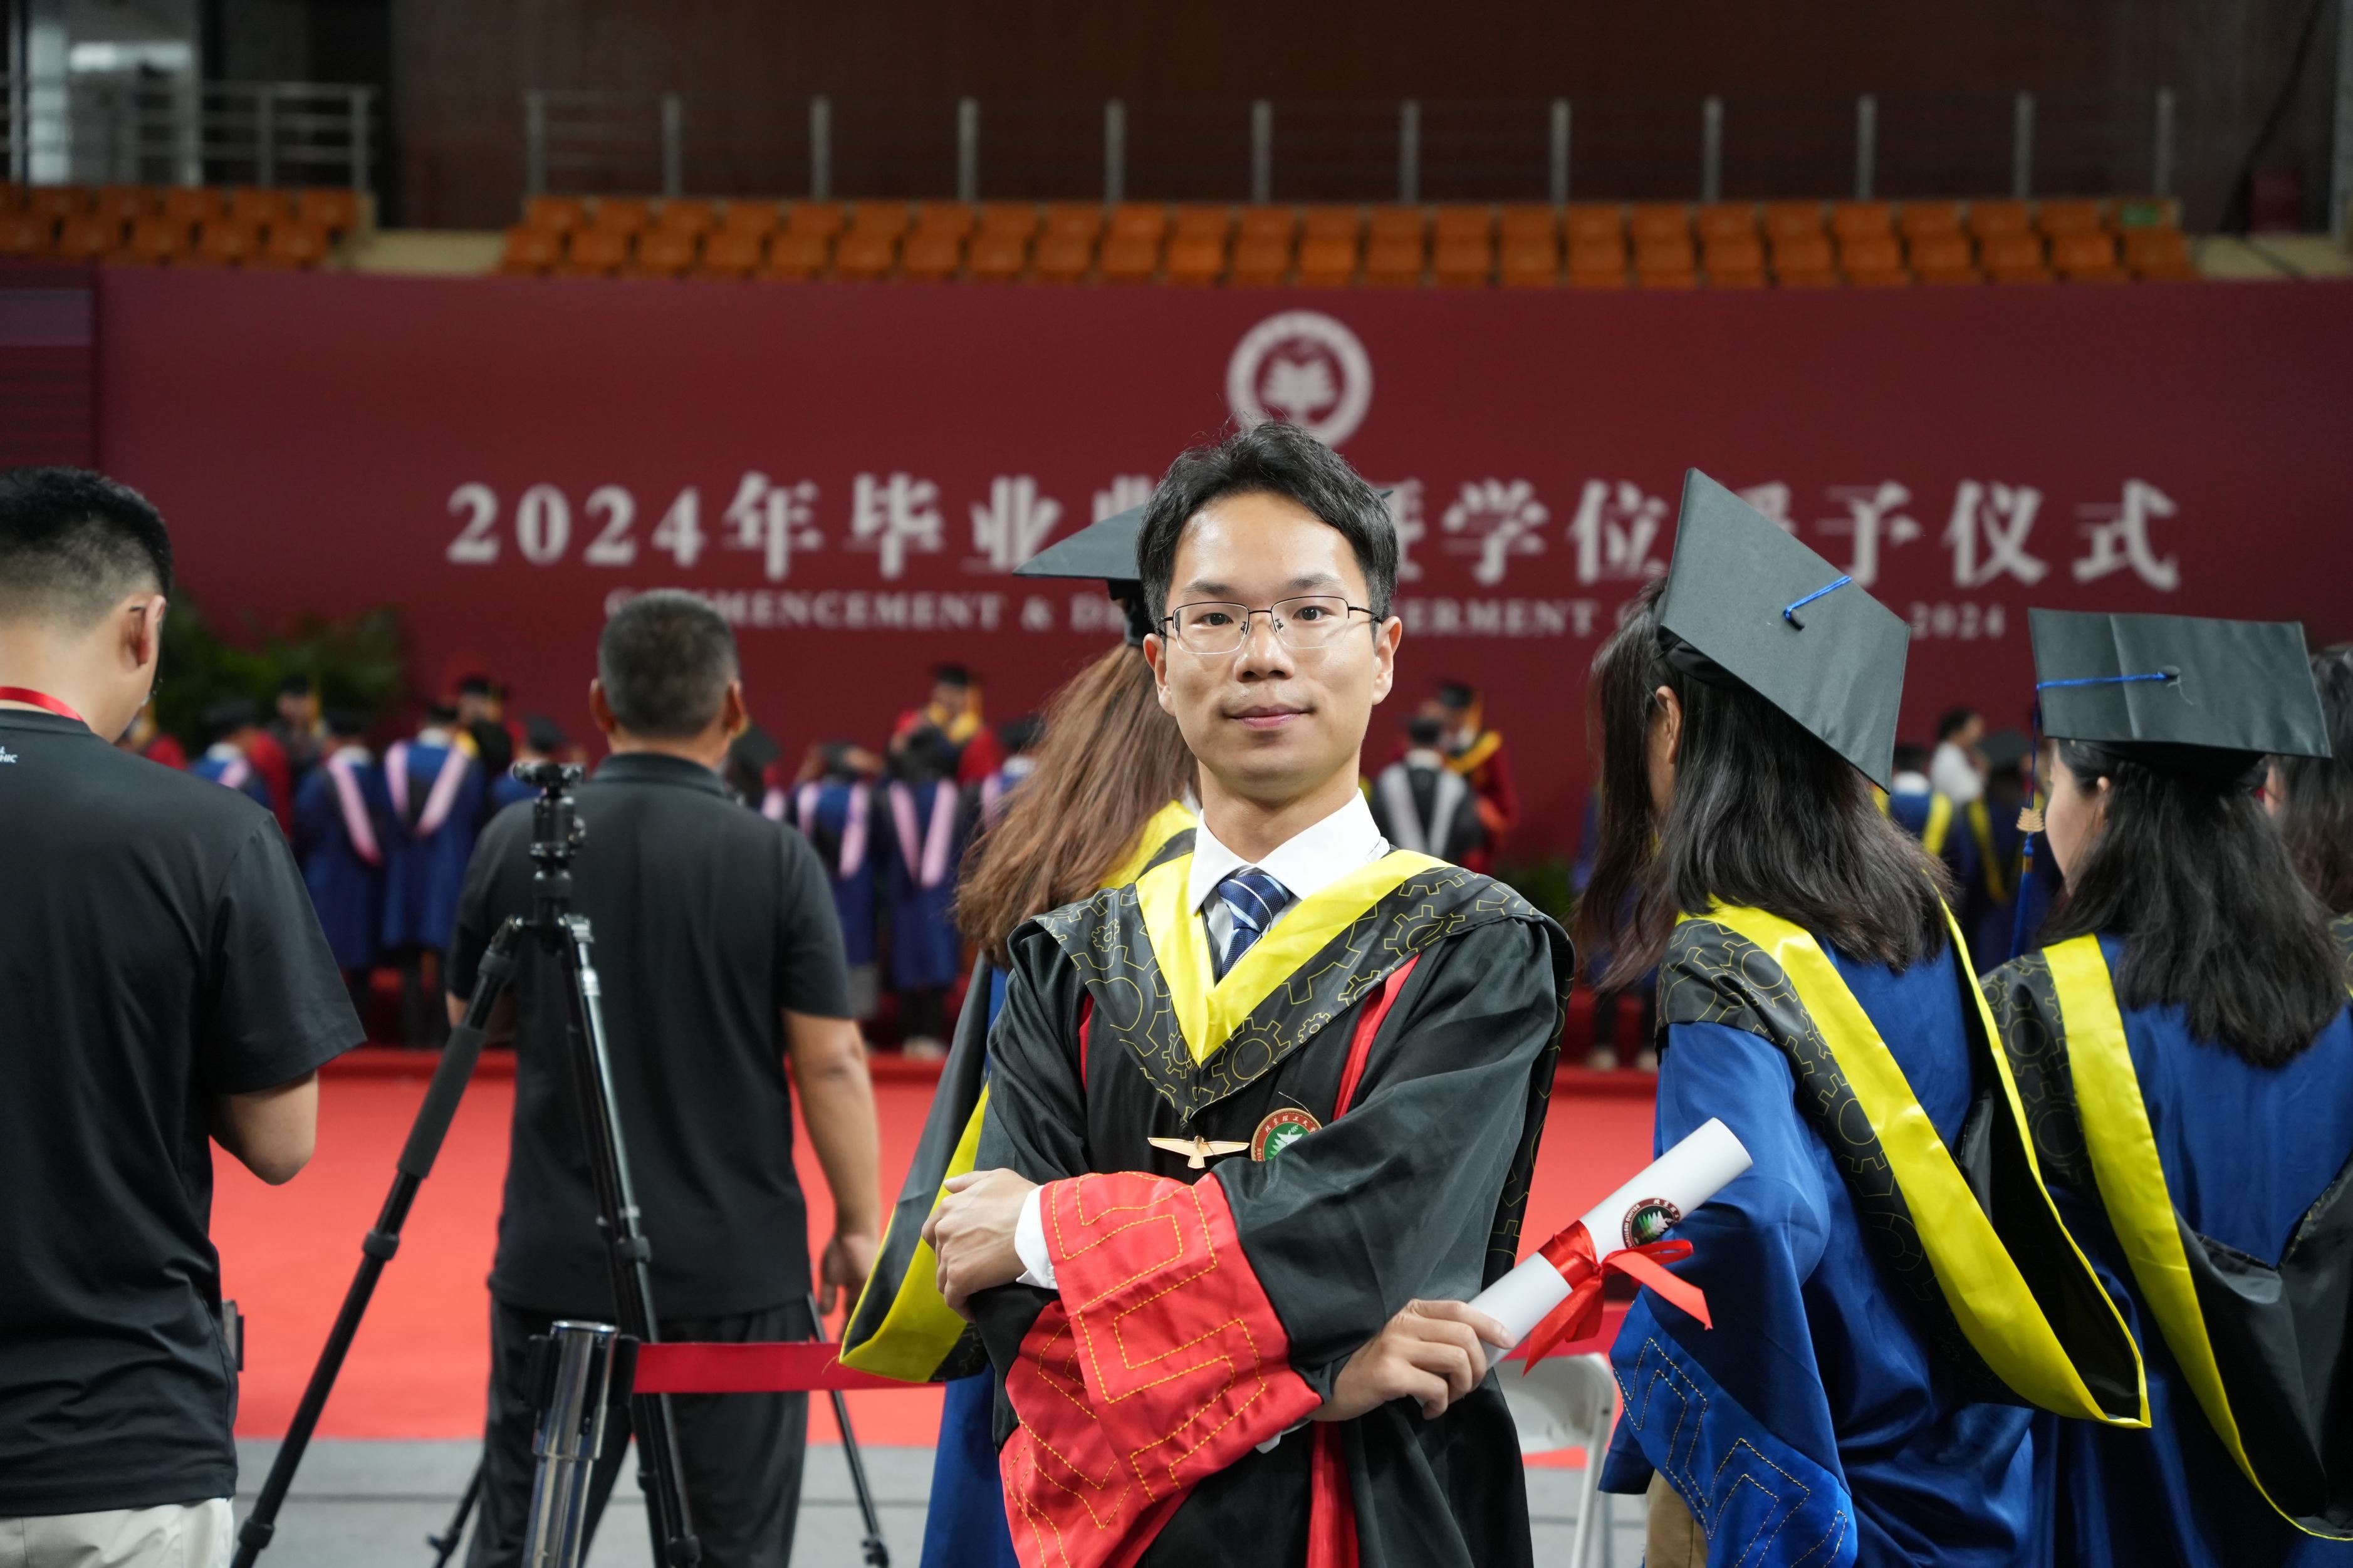 Mingqi PhD